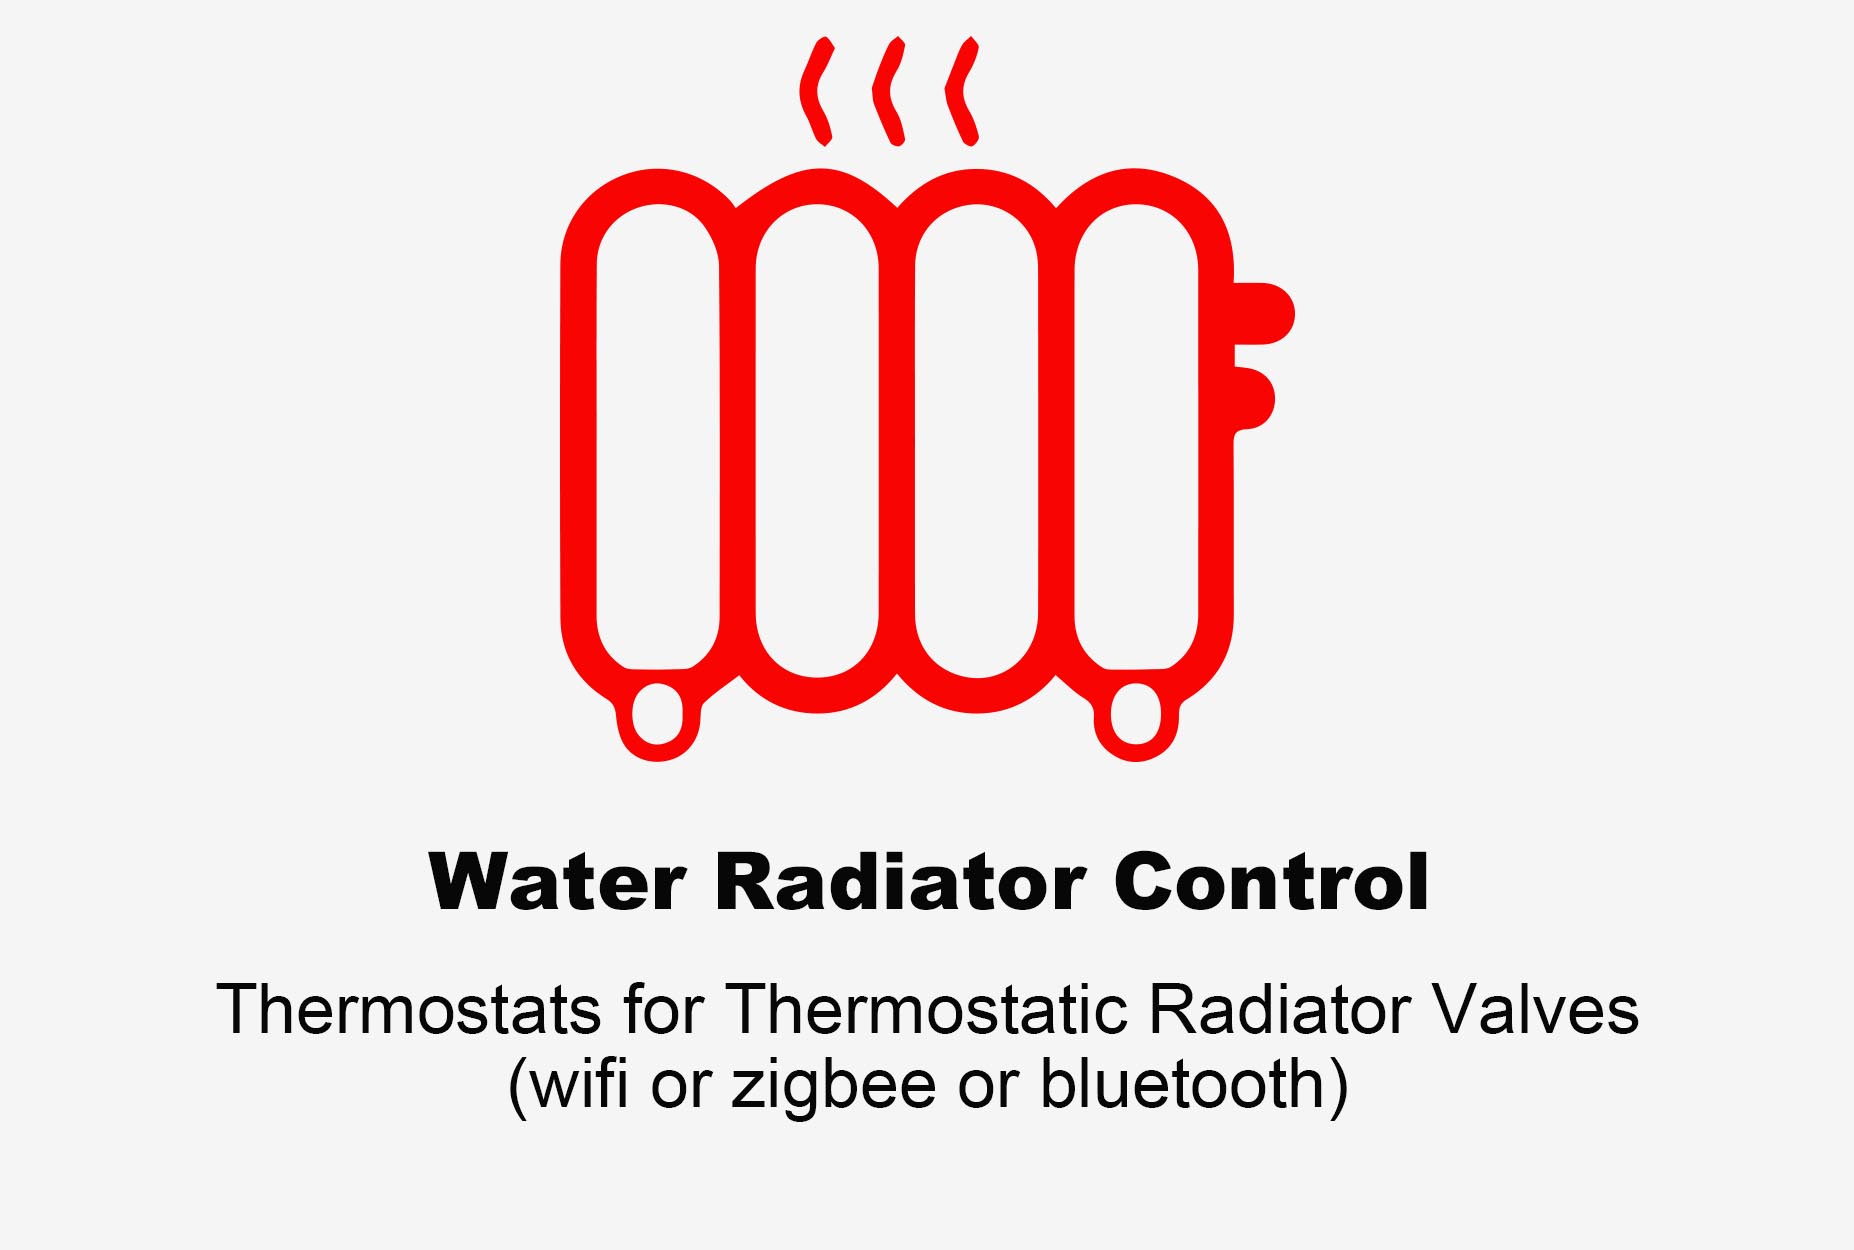 Termostato do radiador de água, termostato bluetooth, termostato do radiador zigbee, termostato do radiador wi-fi